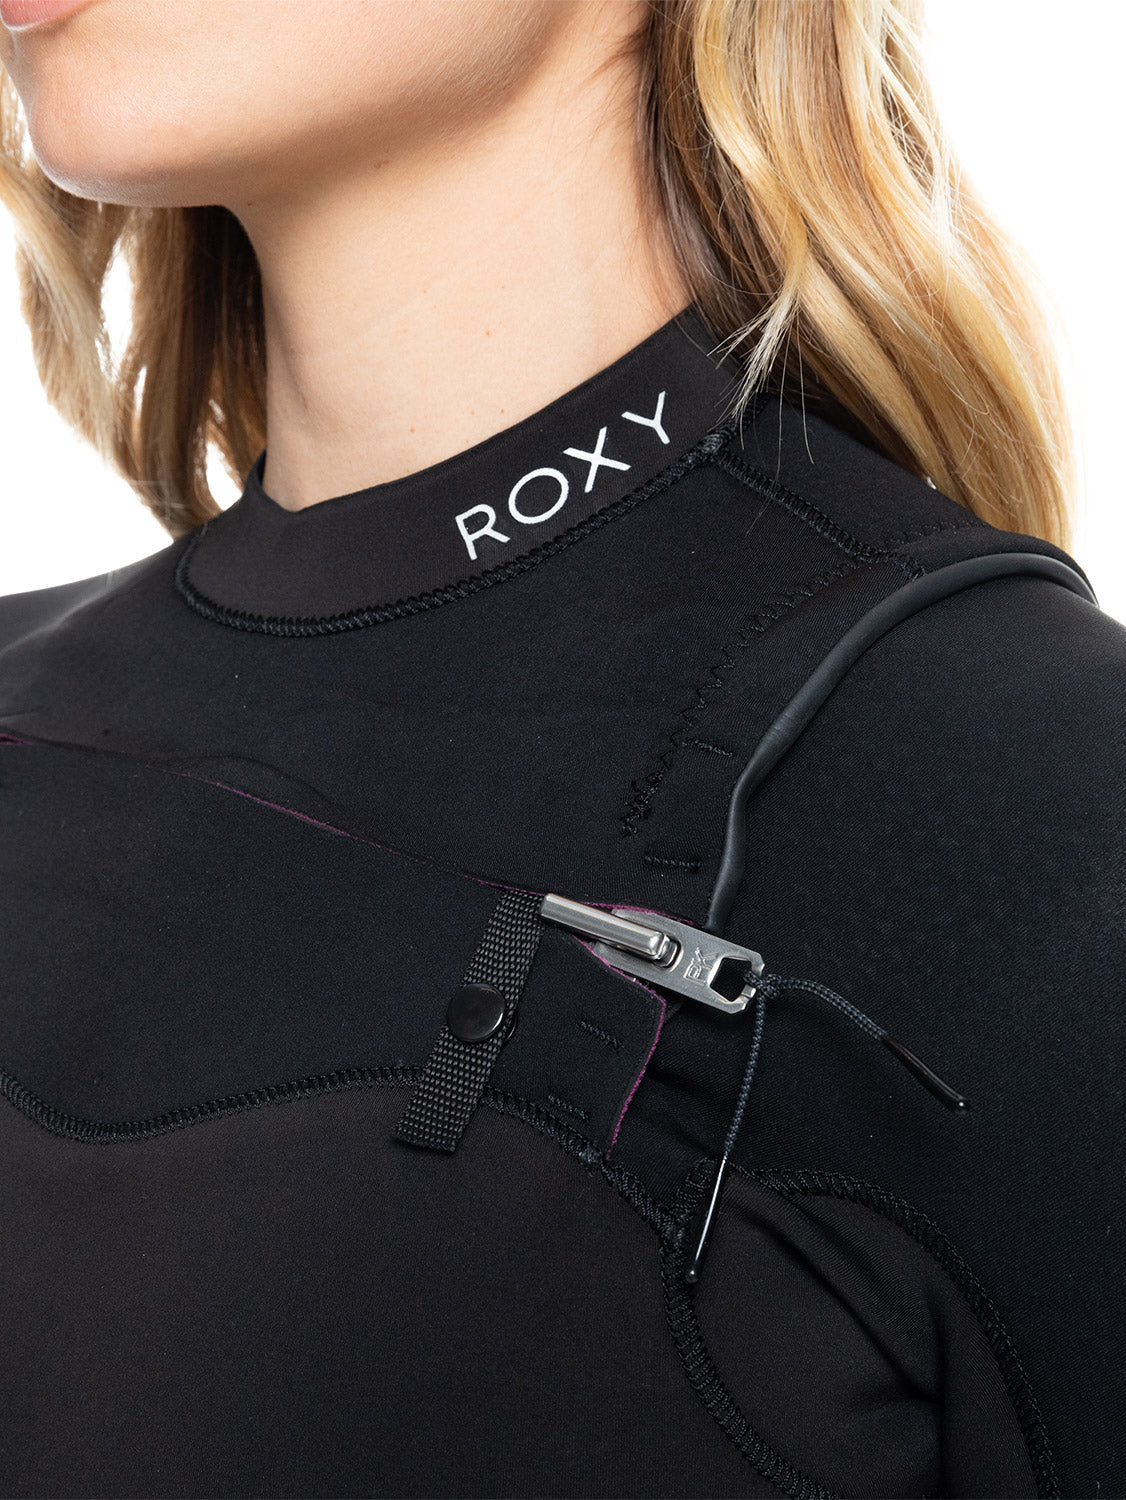 Roxy Ladies 4/3mm Performance Chest Zip Wetsuit